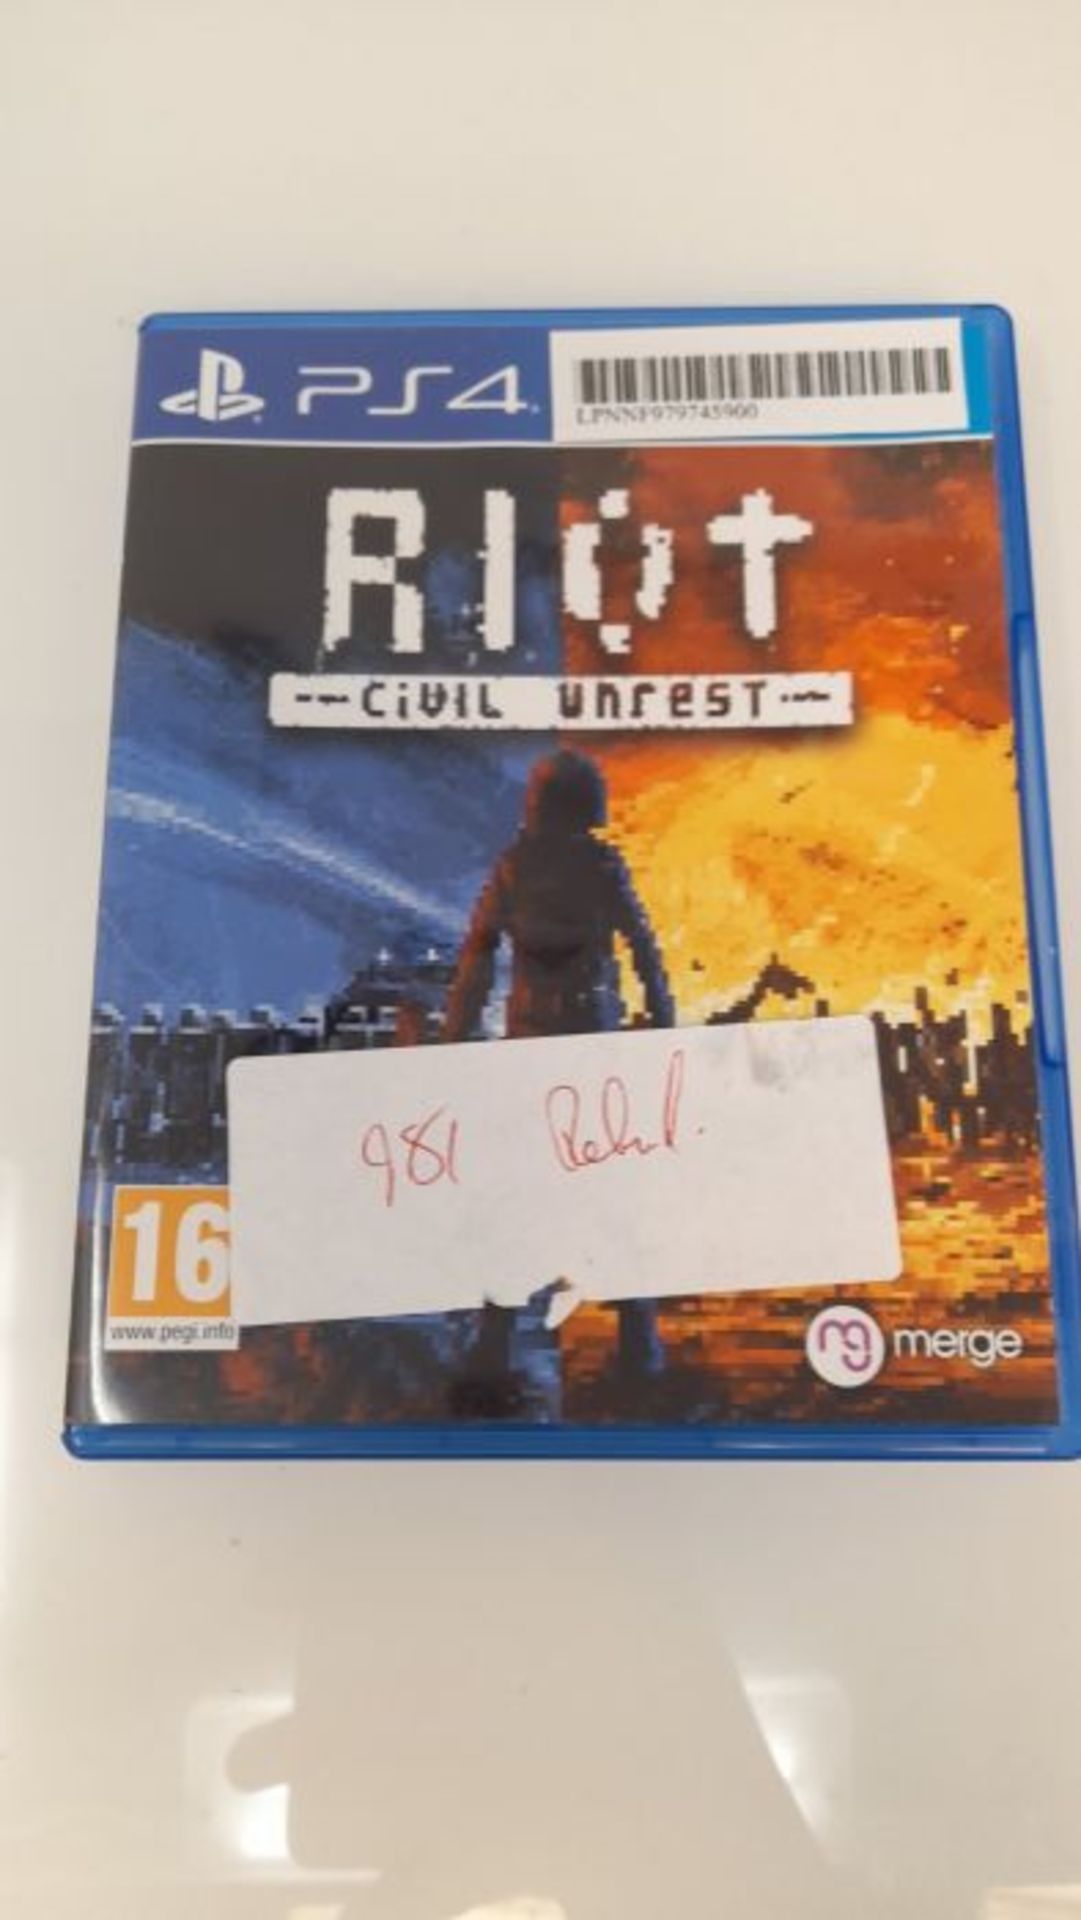 Riot: Civil Unrest (PS4) - Image 2 of 3